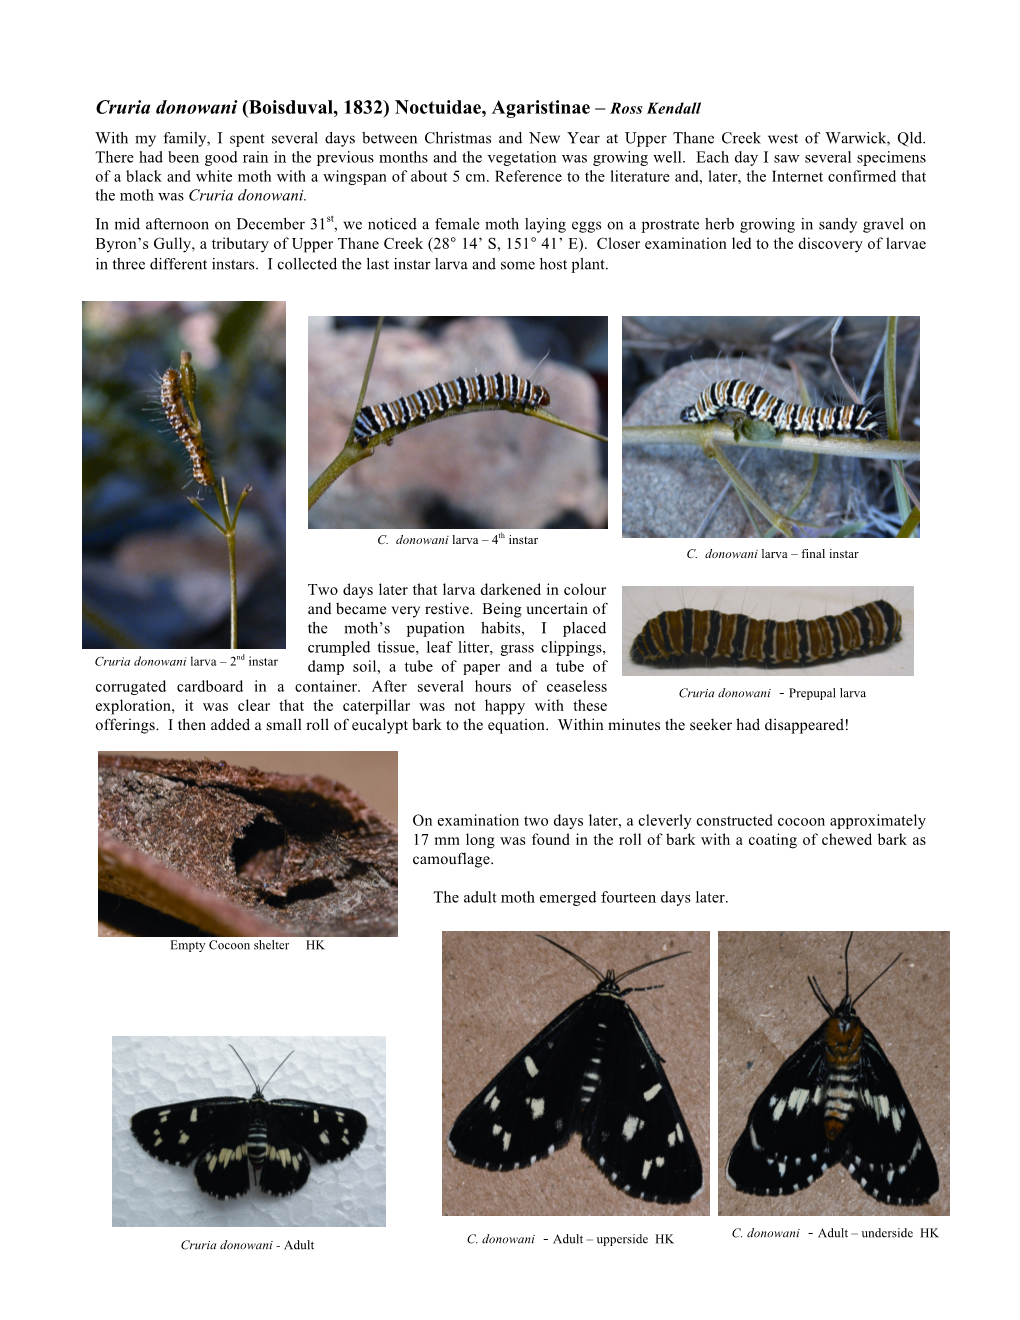 Cruria Donowani (Boisduval, 1832) Noctuidae, Agaristinae – Ross Kendall